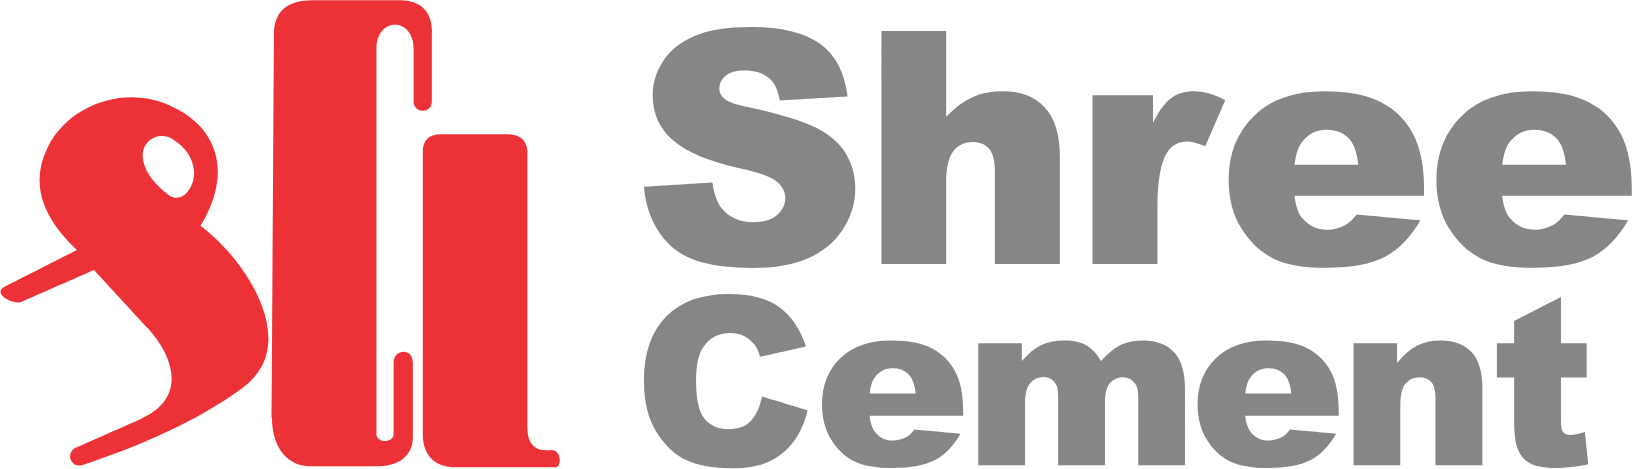 shree cement logo